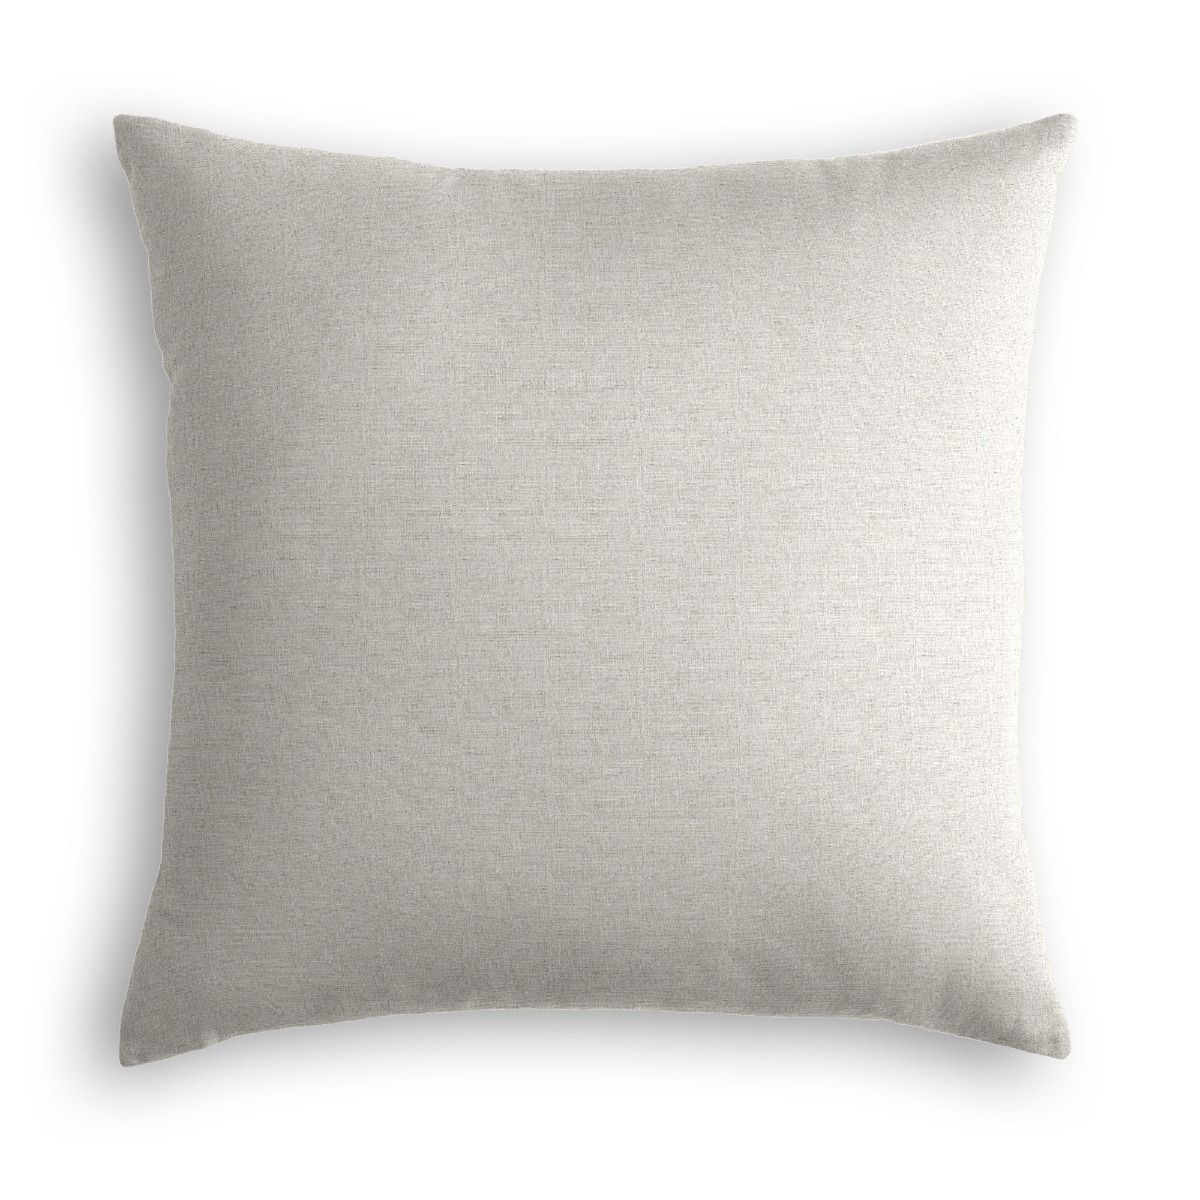 Classic Linen Pillow, Sandy Tan, 20" x 20" - Image 0